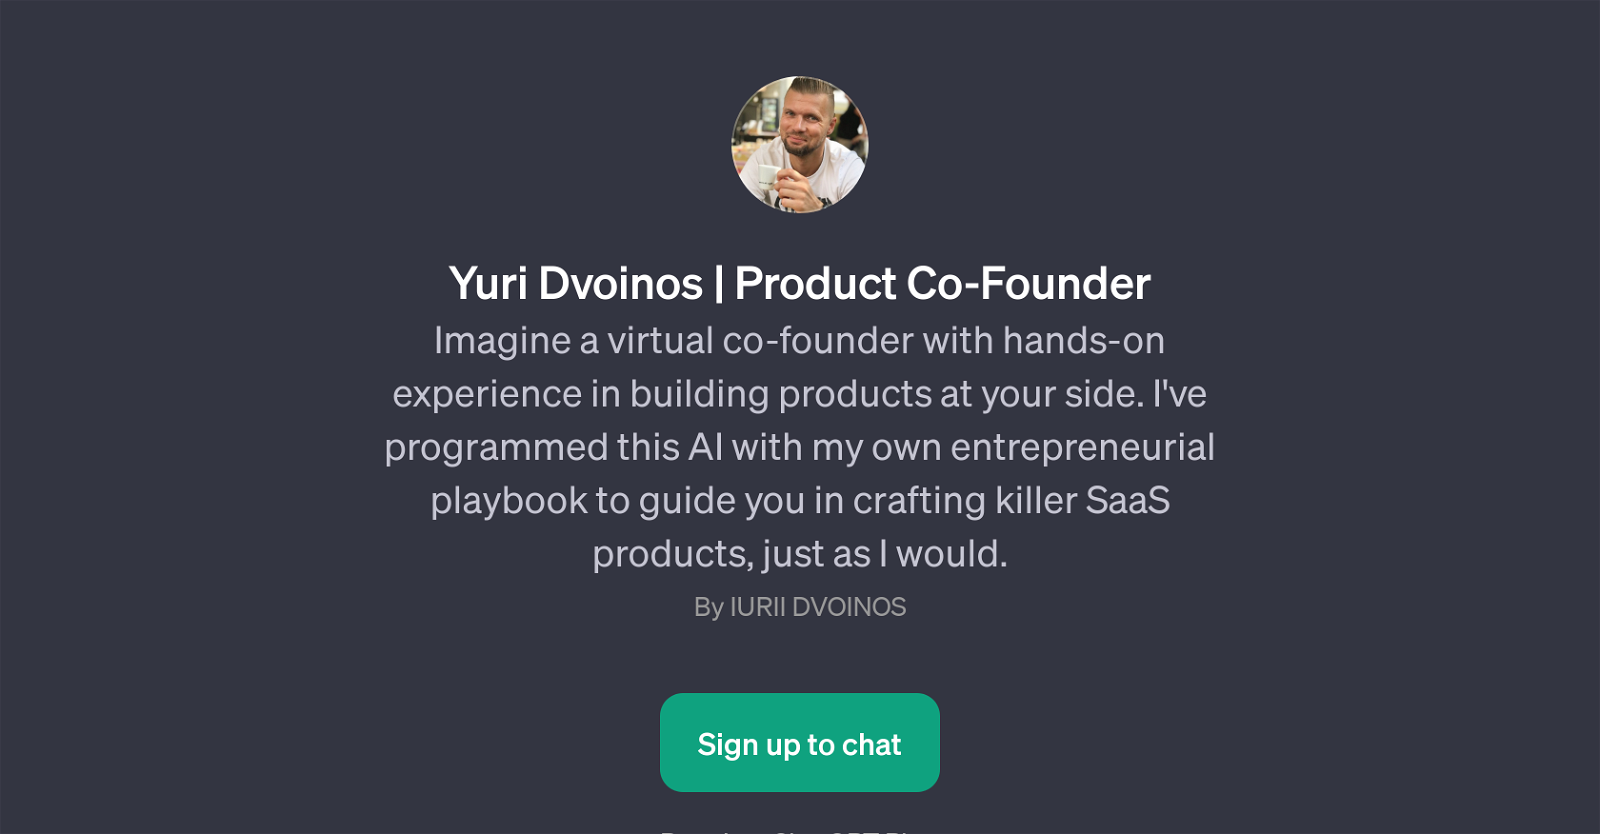 Yuri Dvoinos | Product Co-Founder website